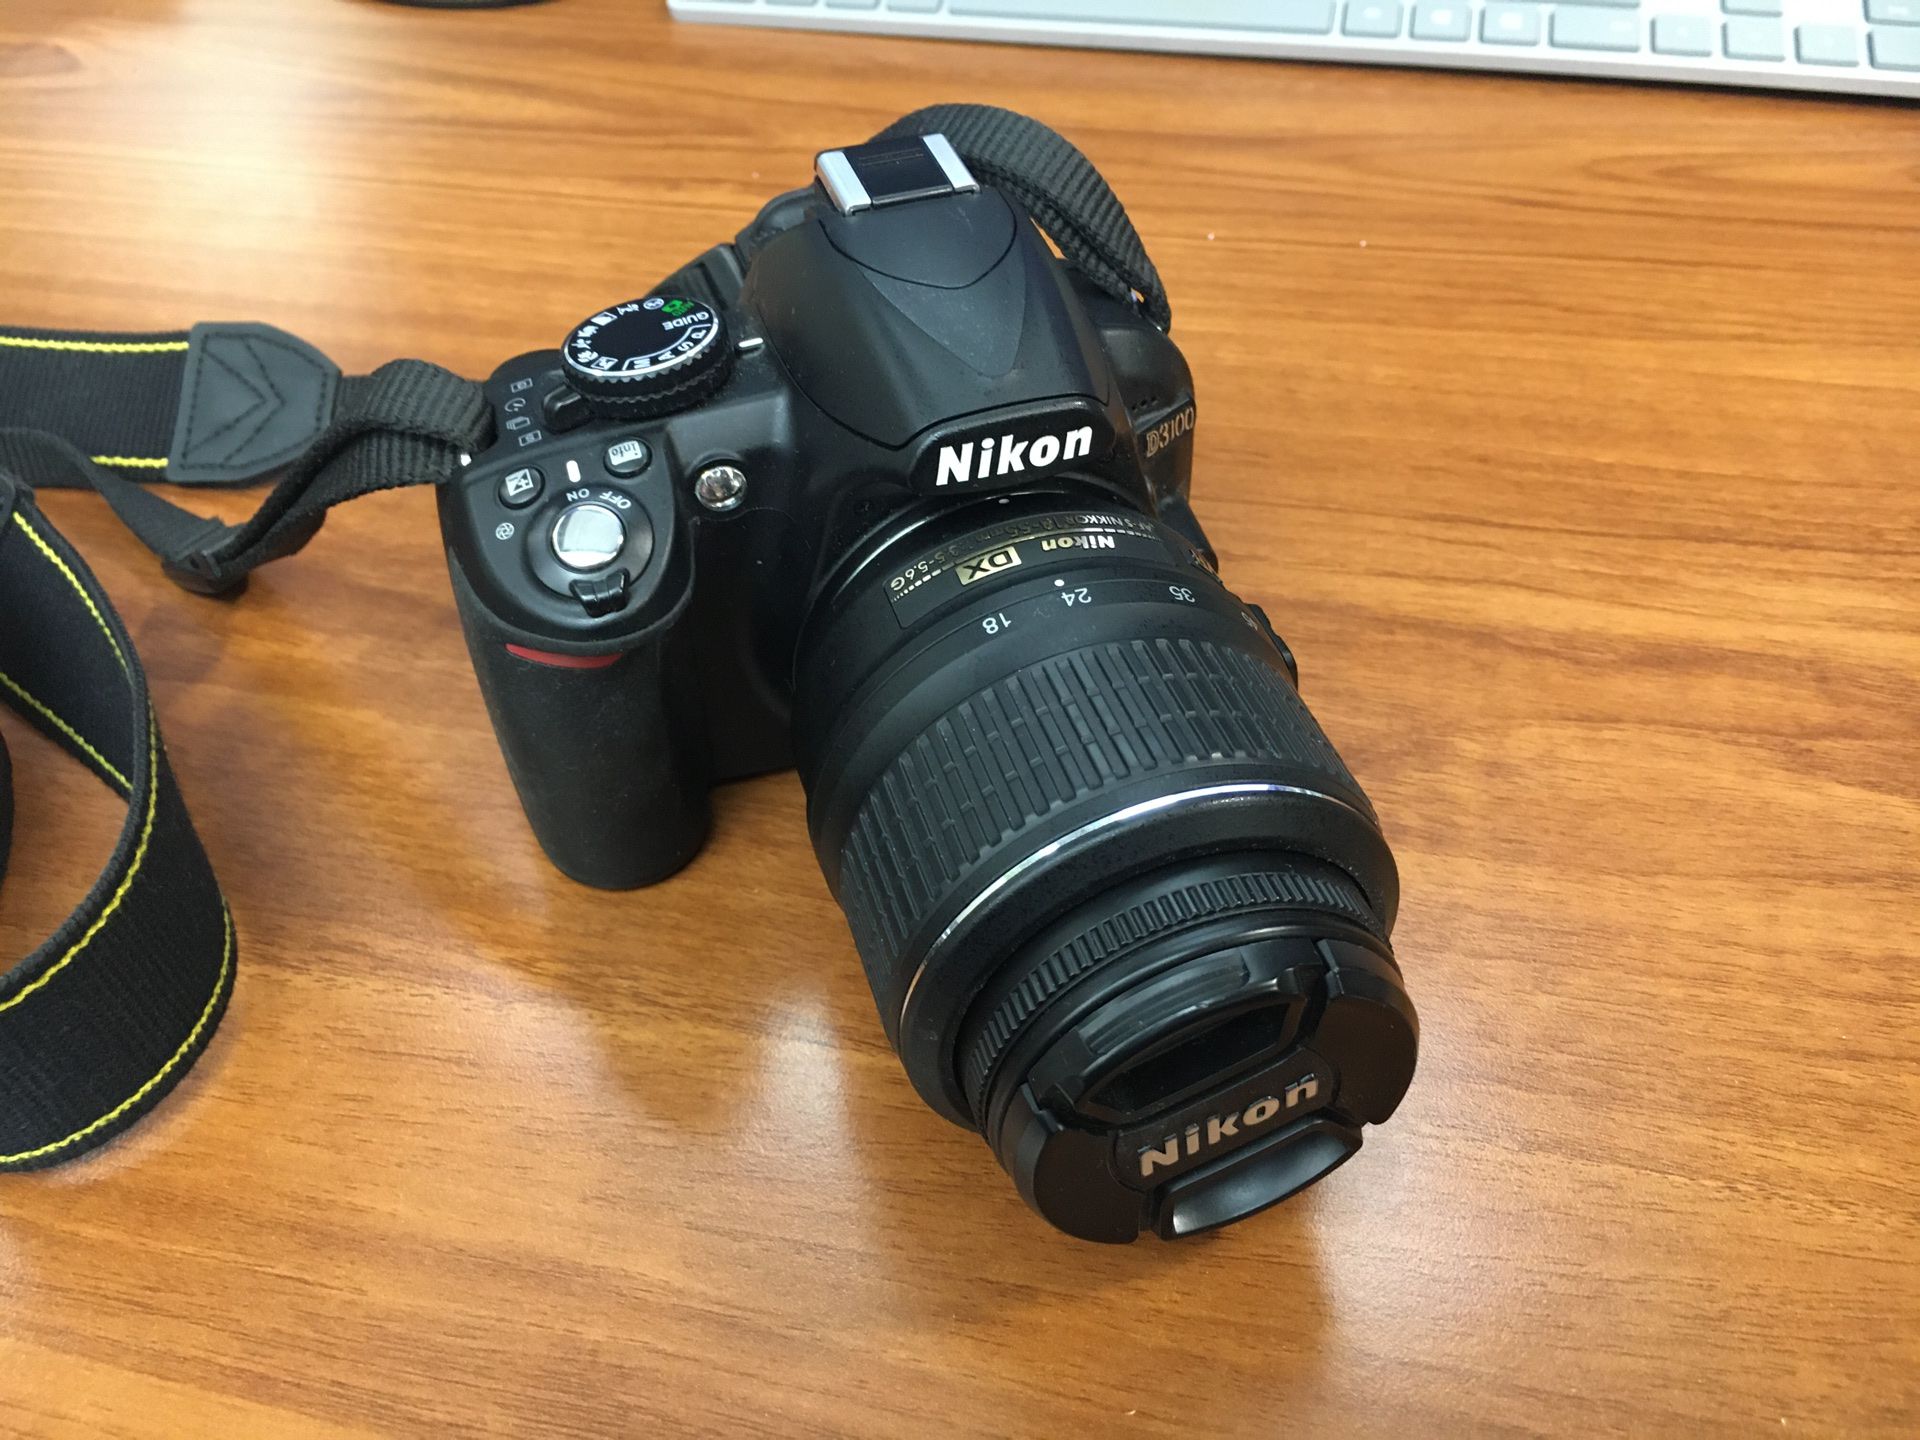 Nikon D3100 Digital Camera with Nikon DX 18-55 Lens and Strap